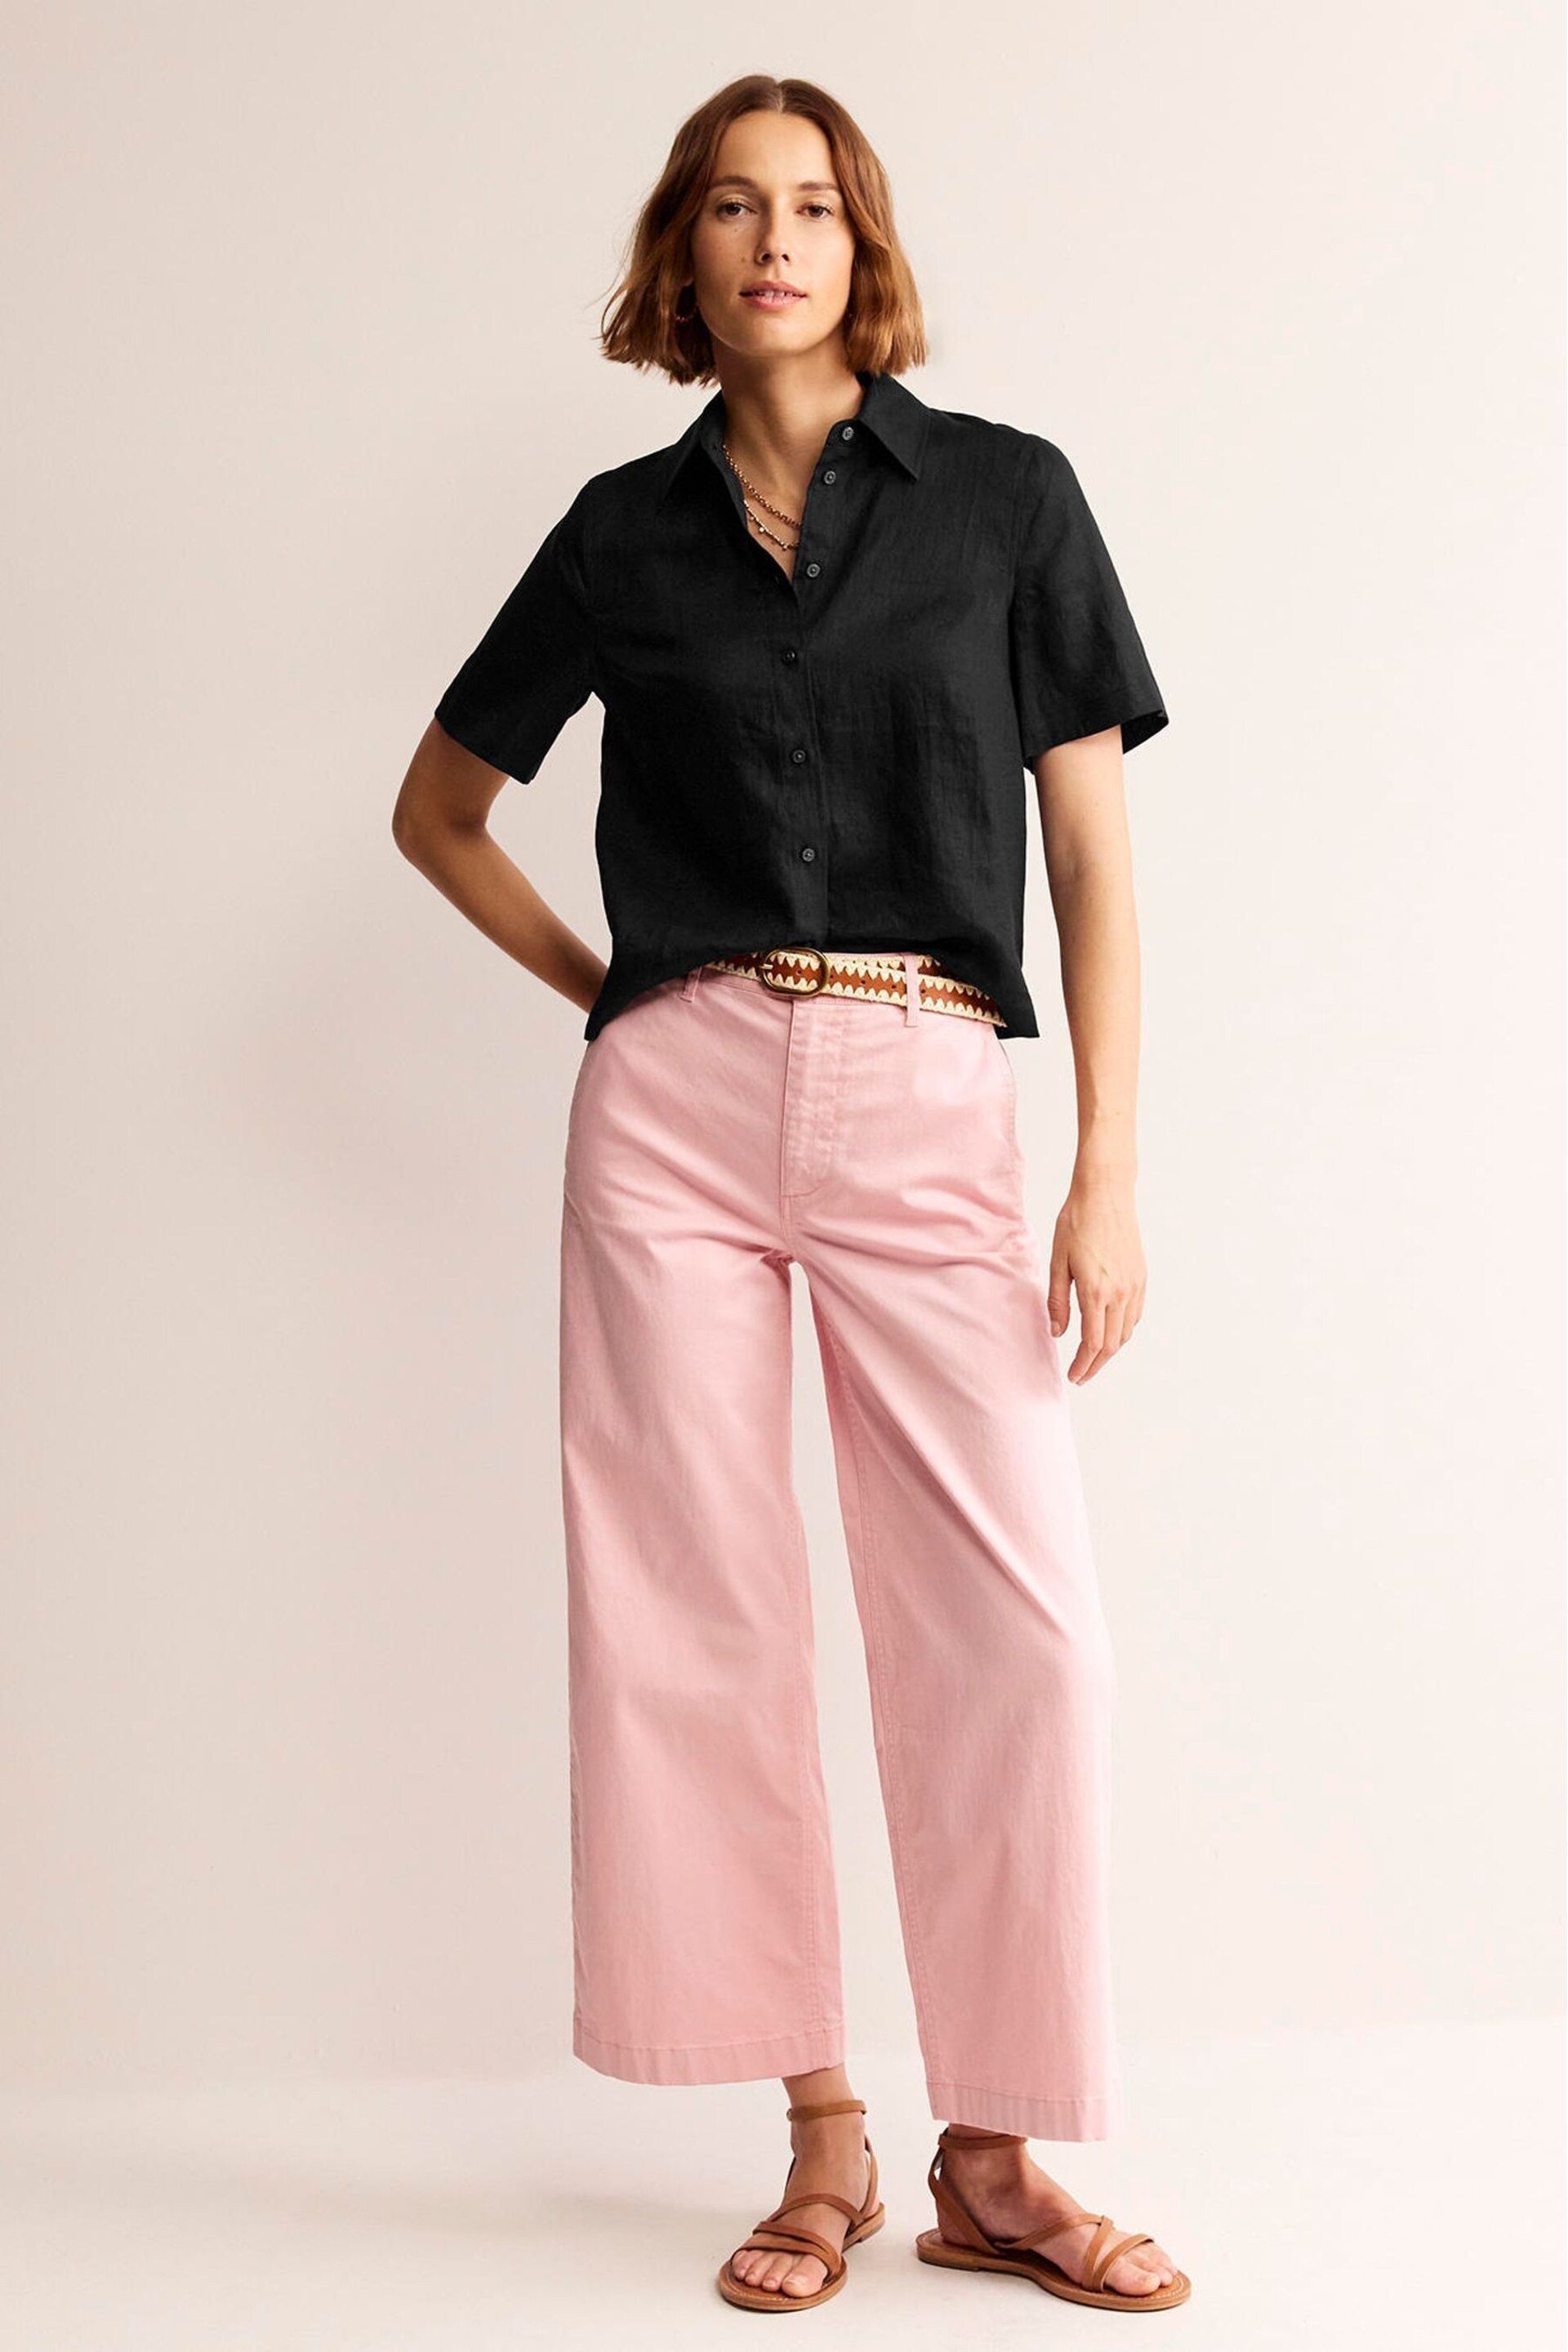 Boden Black Hazel Short Sleeve Linen Shirt - Image 4 of 5